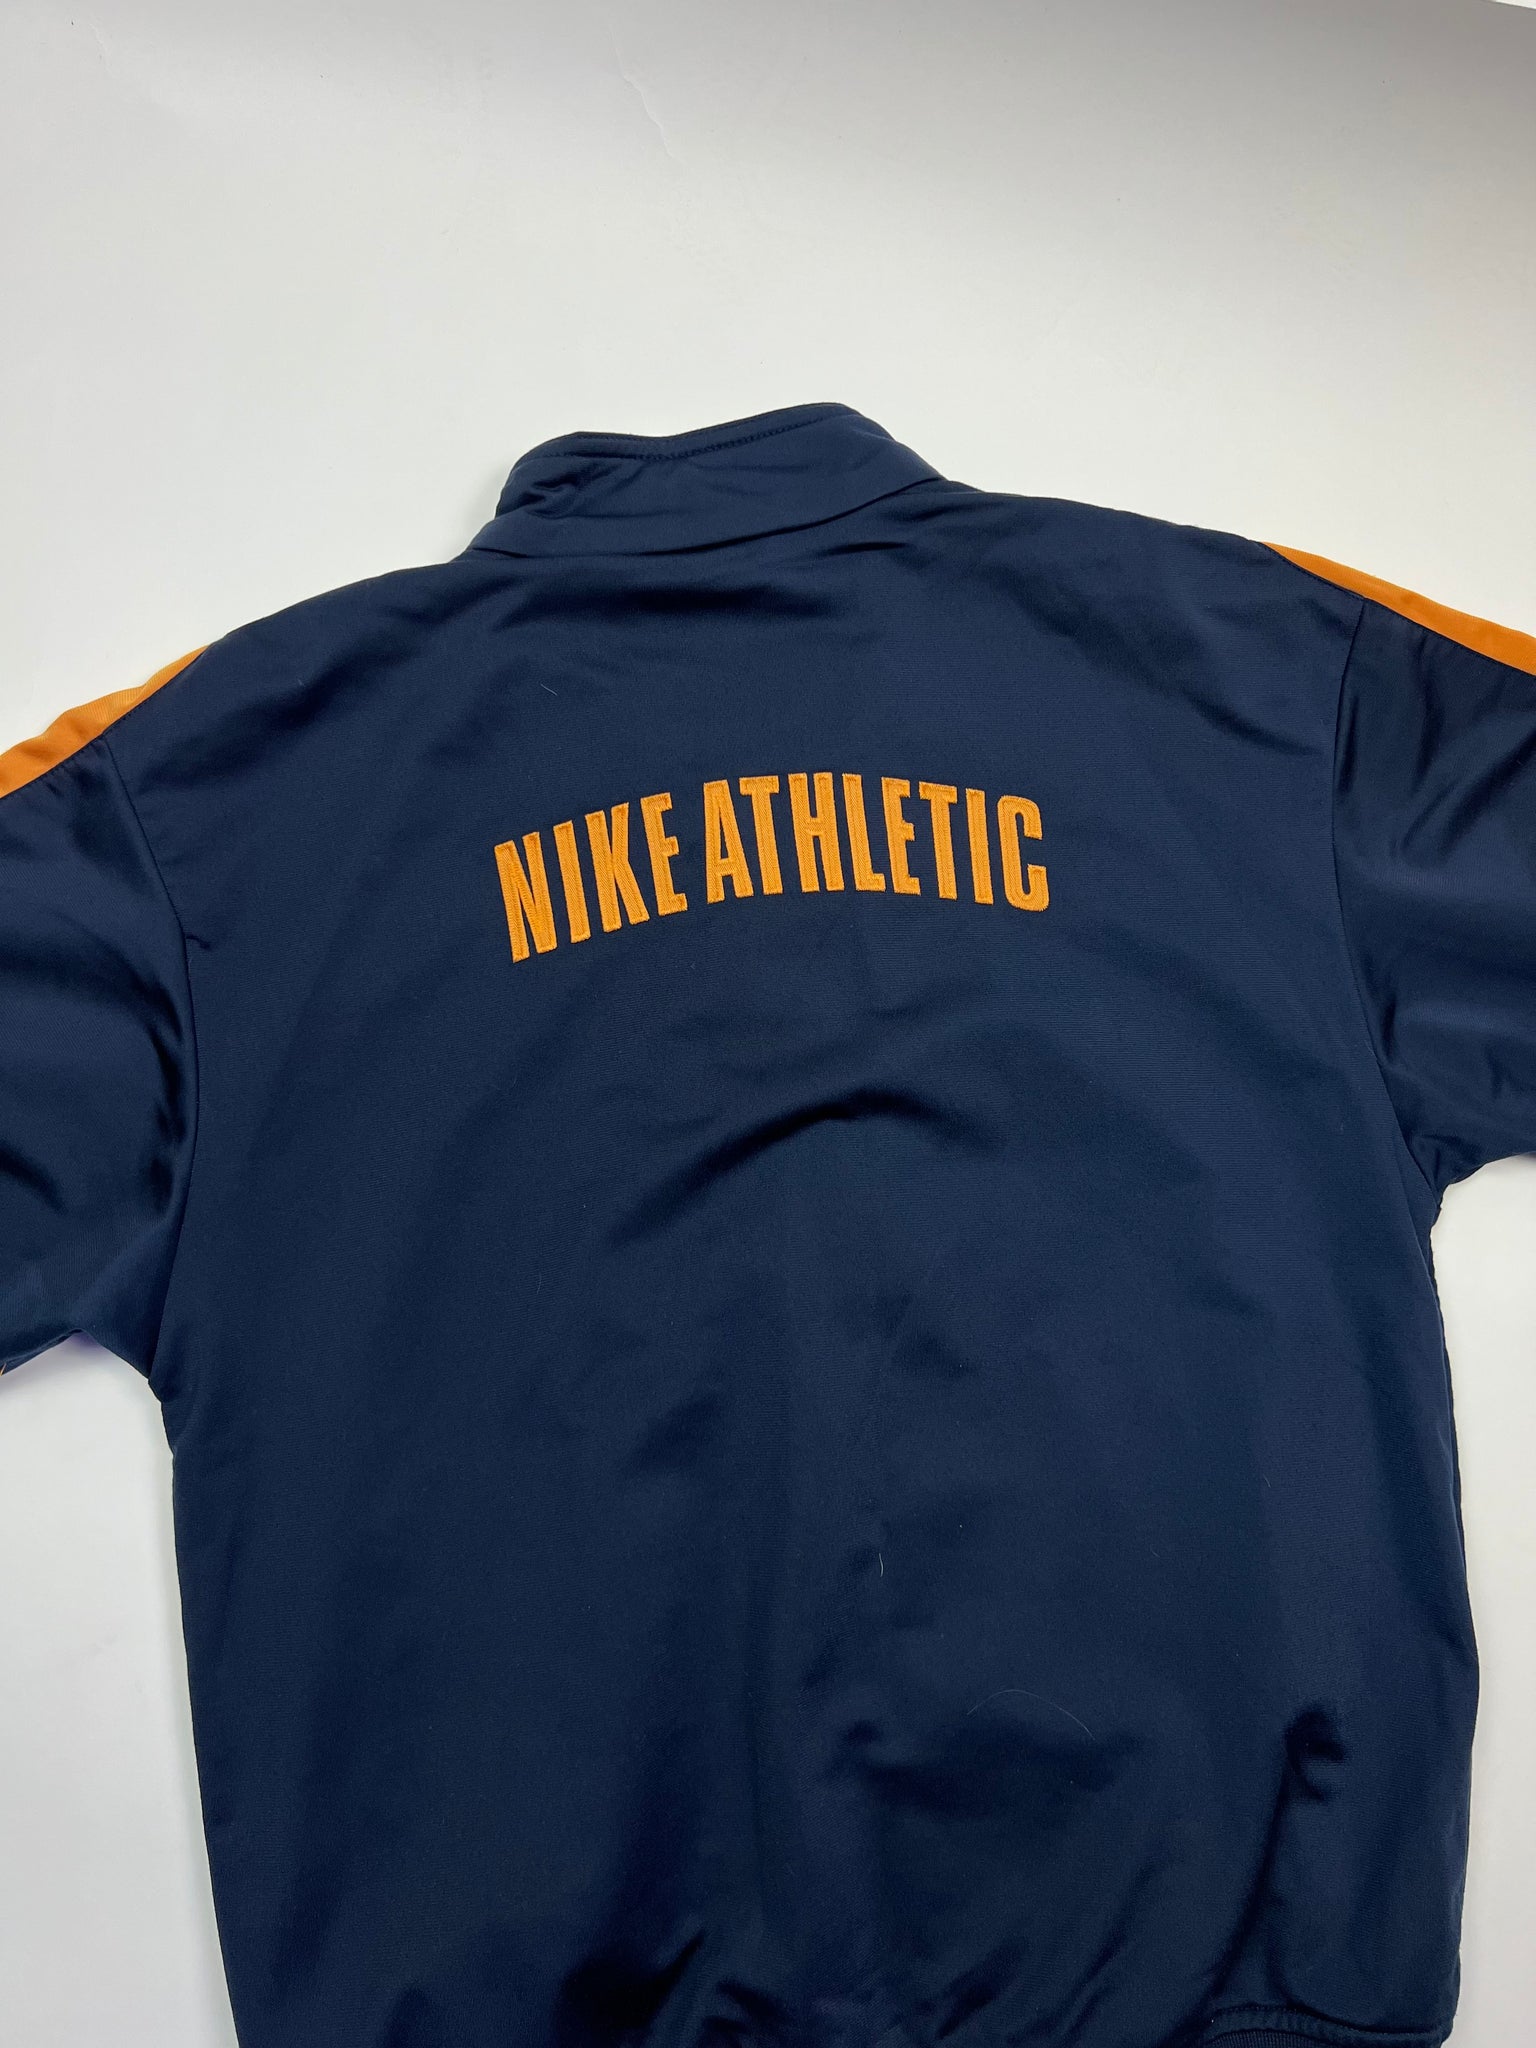 Nike Track Jacket (Kids XL)